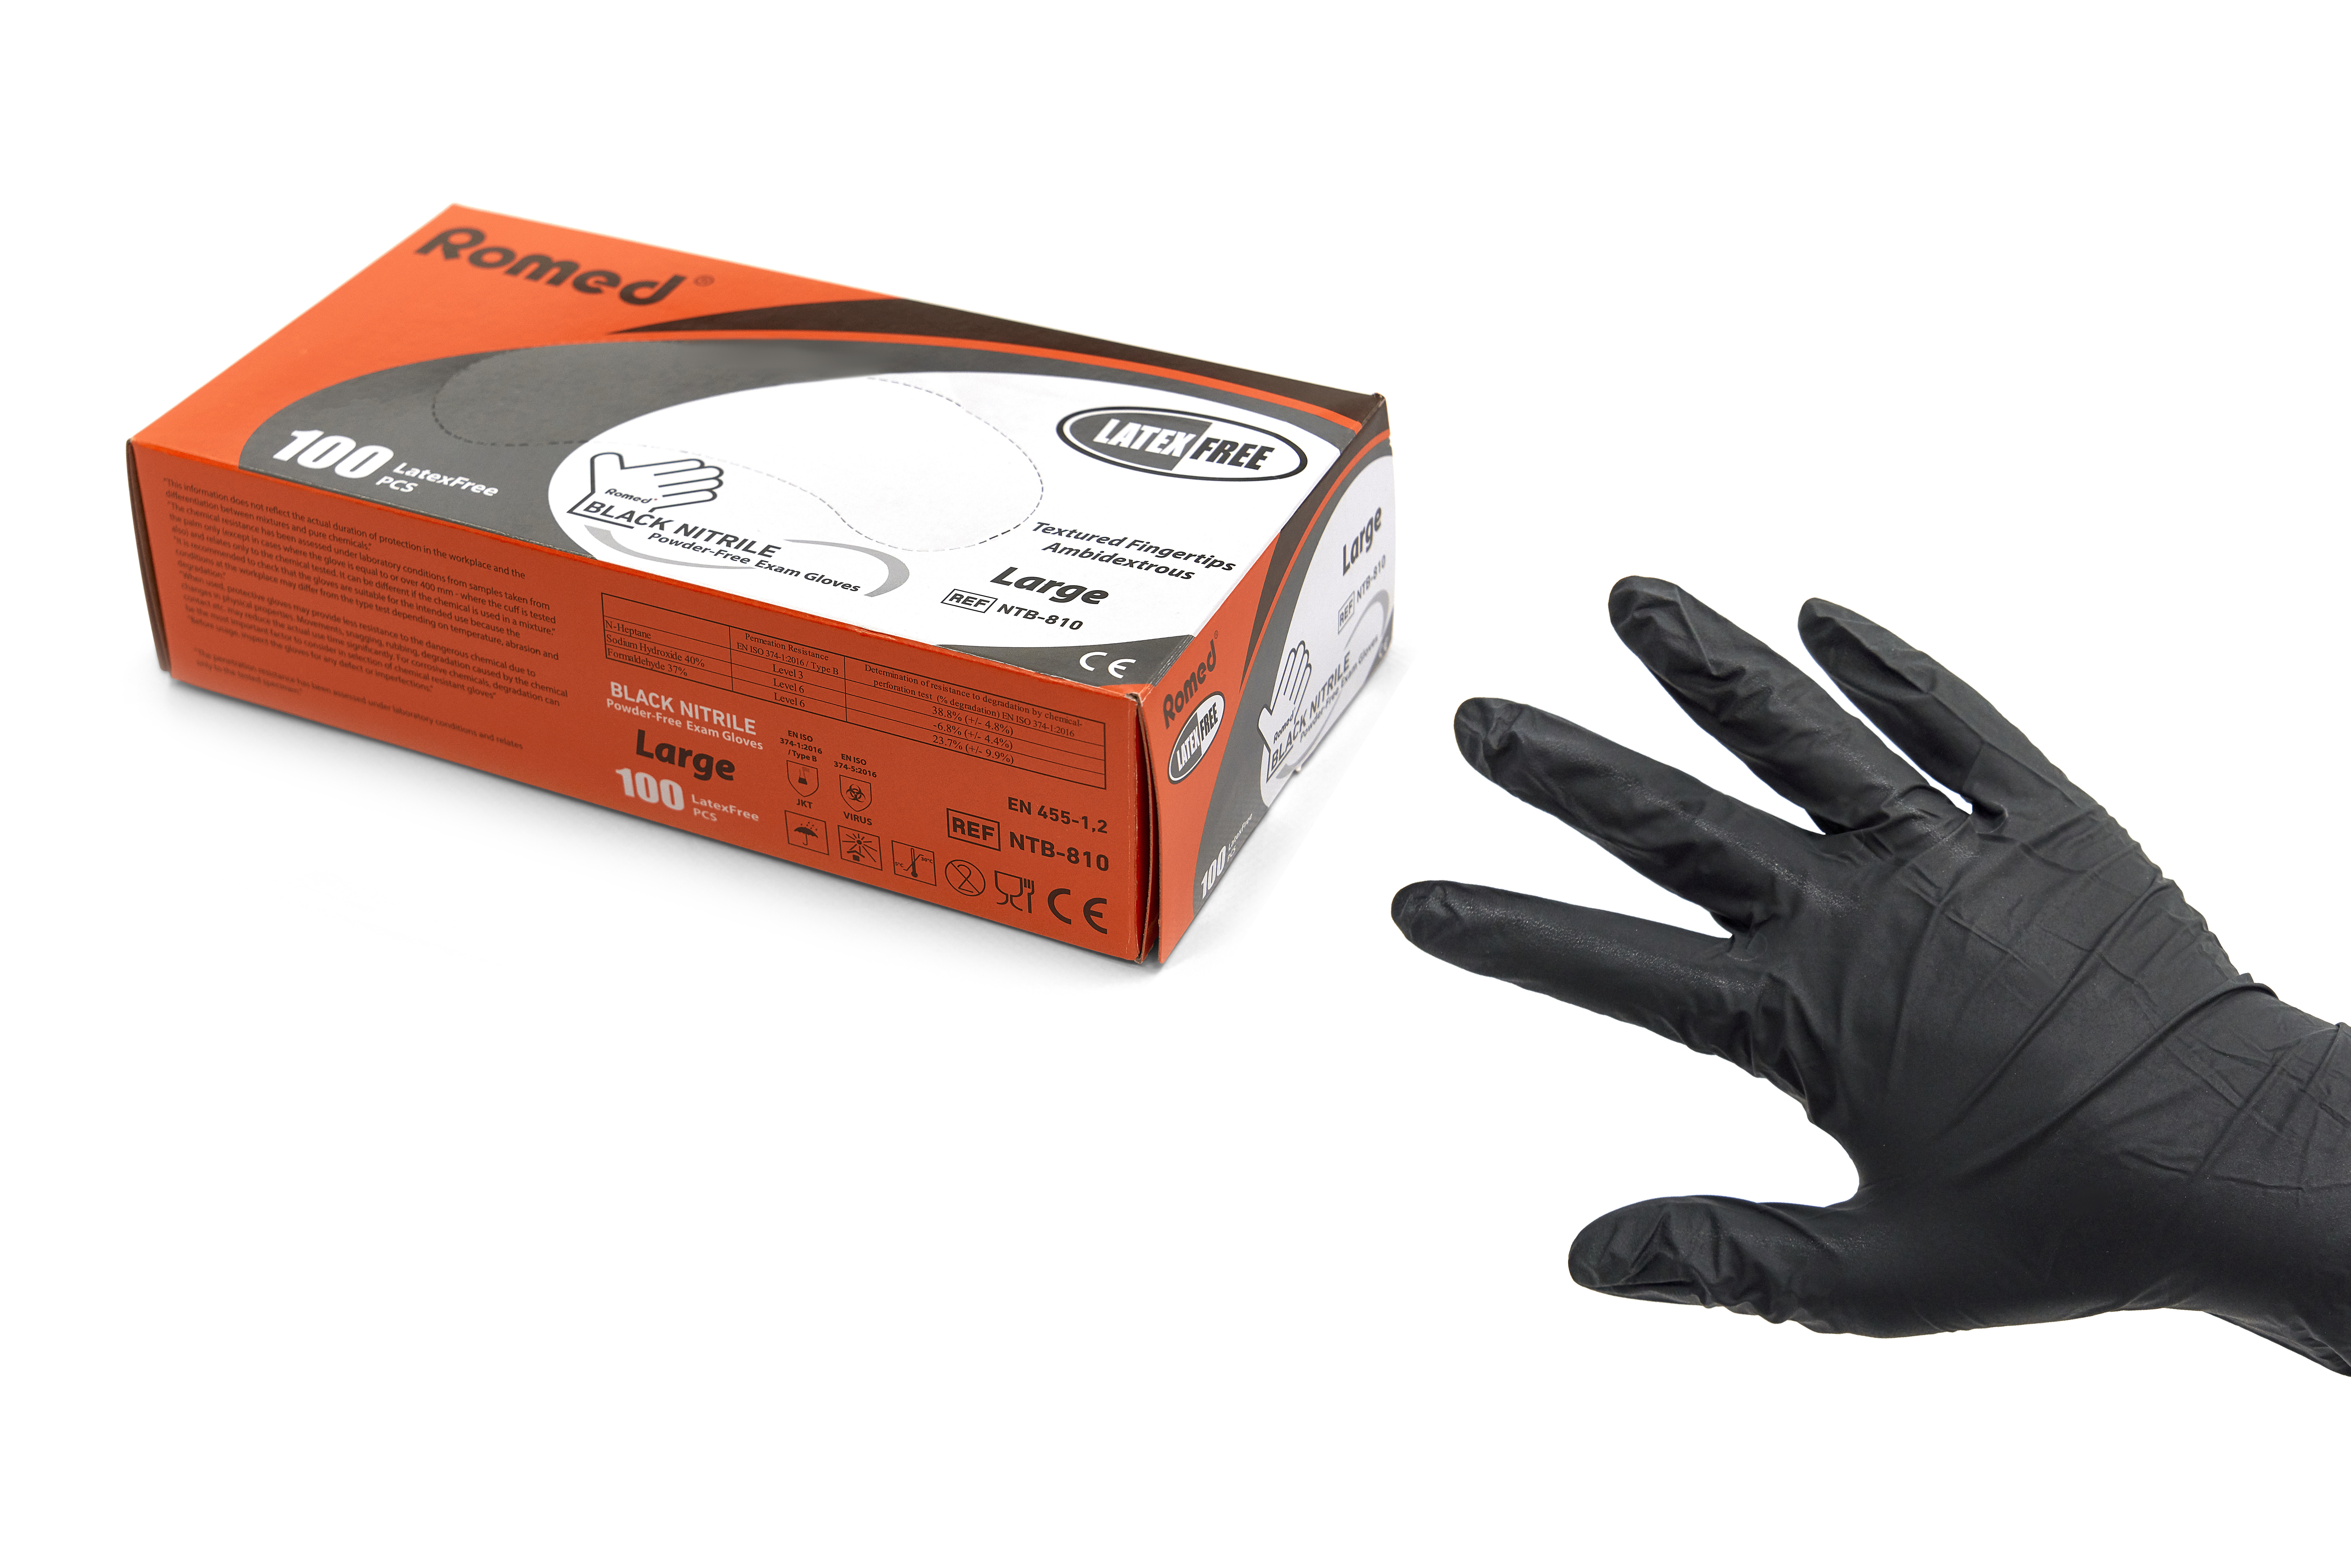 NTB-800 Romed nitrile examination gloves, non sterile, powderfree, black, small, per 100 pcs in a dispenser box, 10 x 100 pcs = 1.000 pcs in a carton.